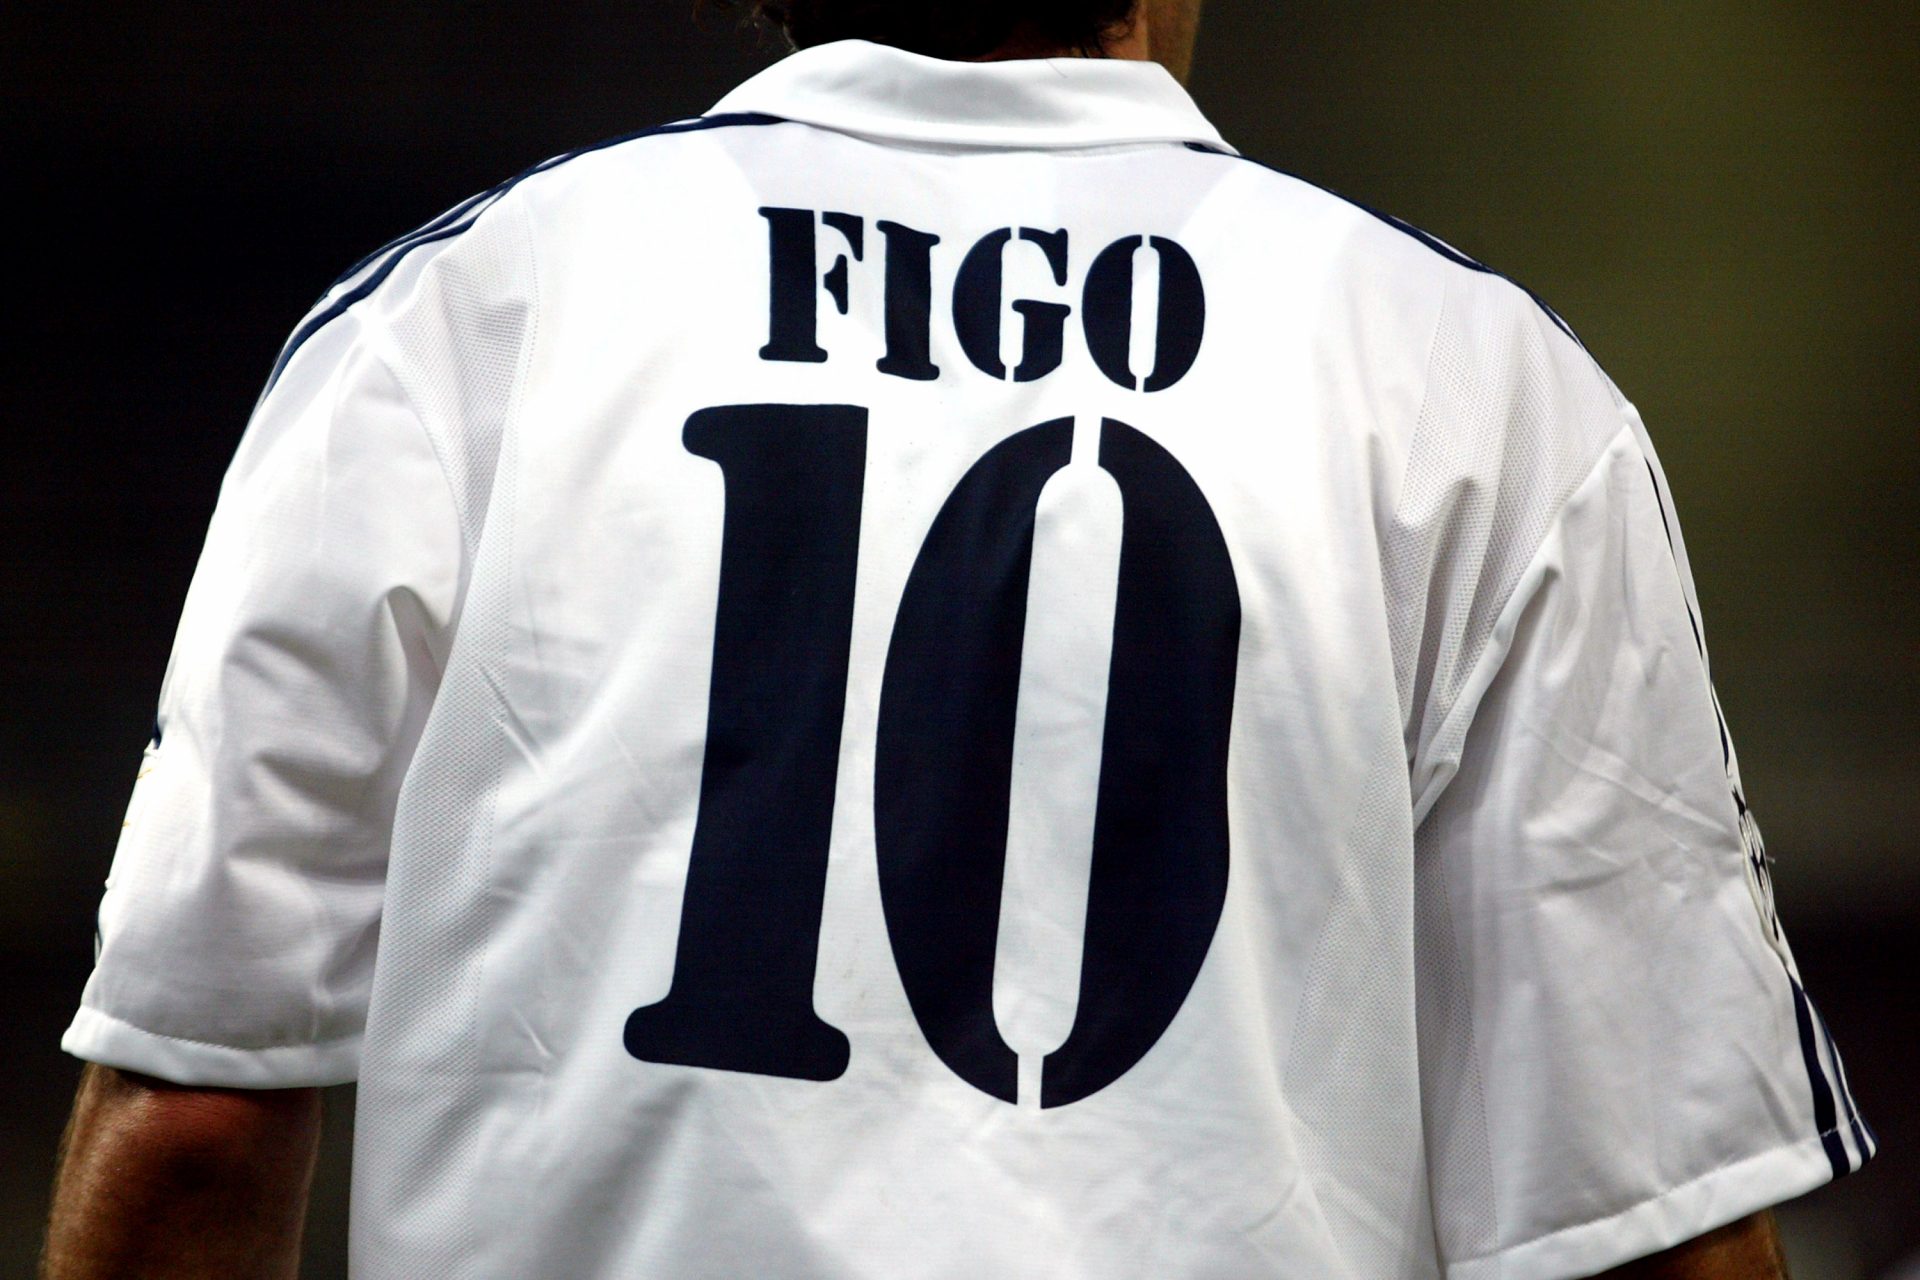 And then... Figo